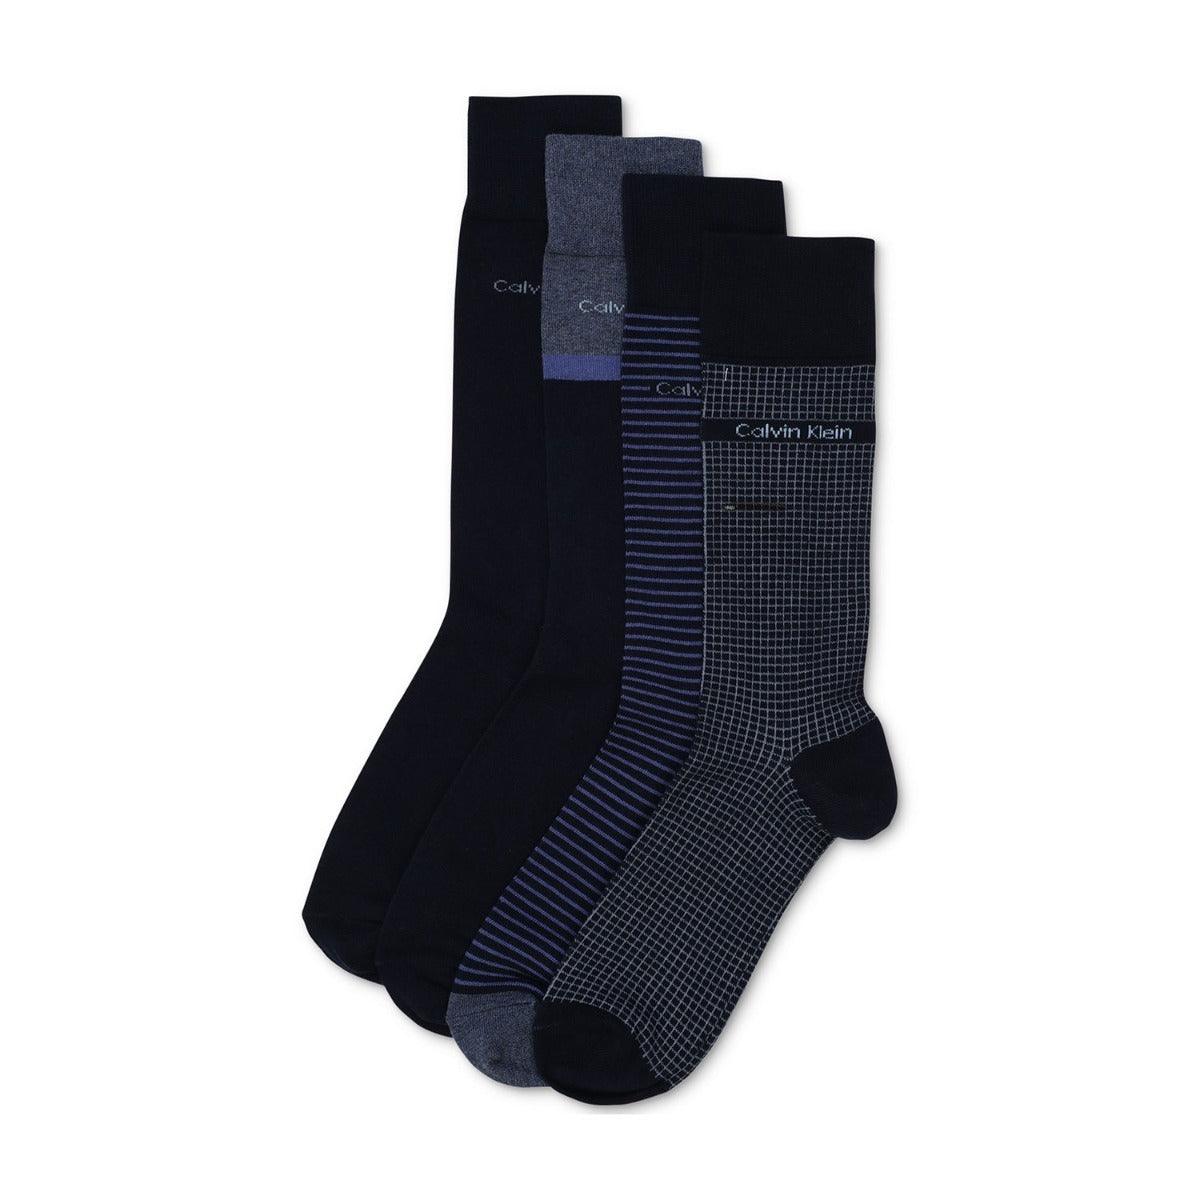 Calvin Klein 4 Pack Multi Stripe Heel Dress Socks - One Size - The Next Pair